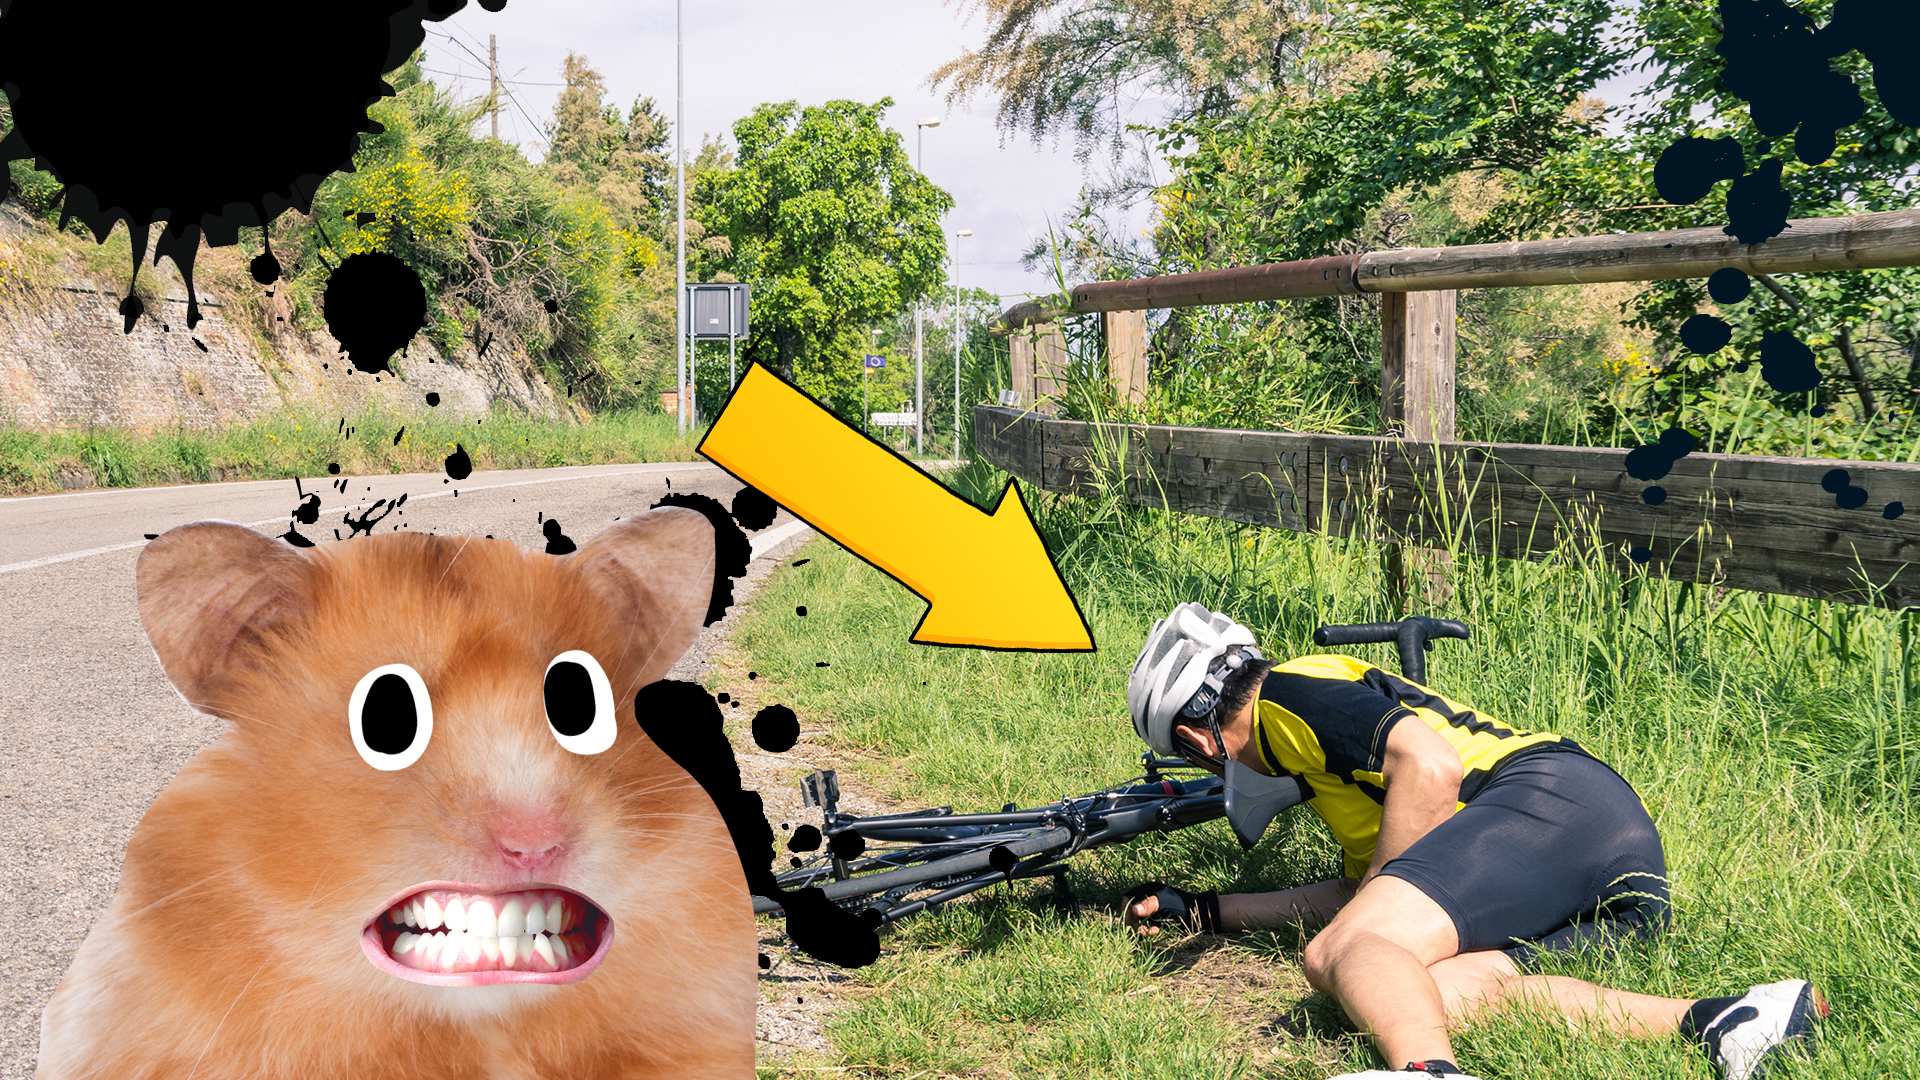 A cyclist has fallen over on soft grass